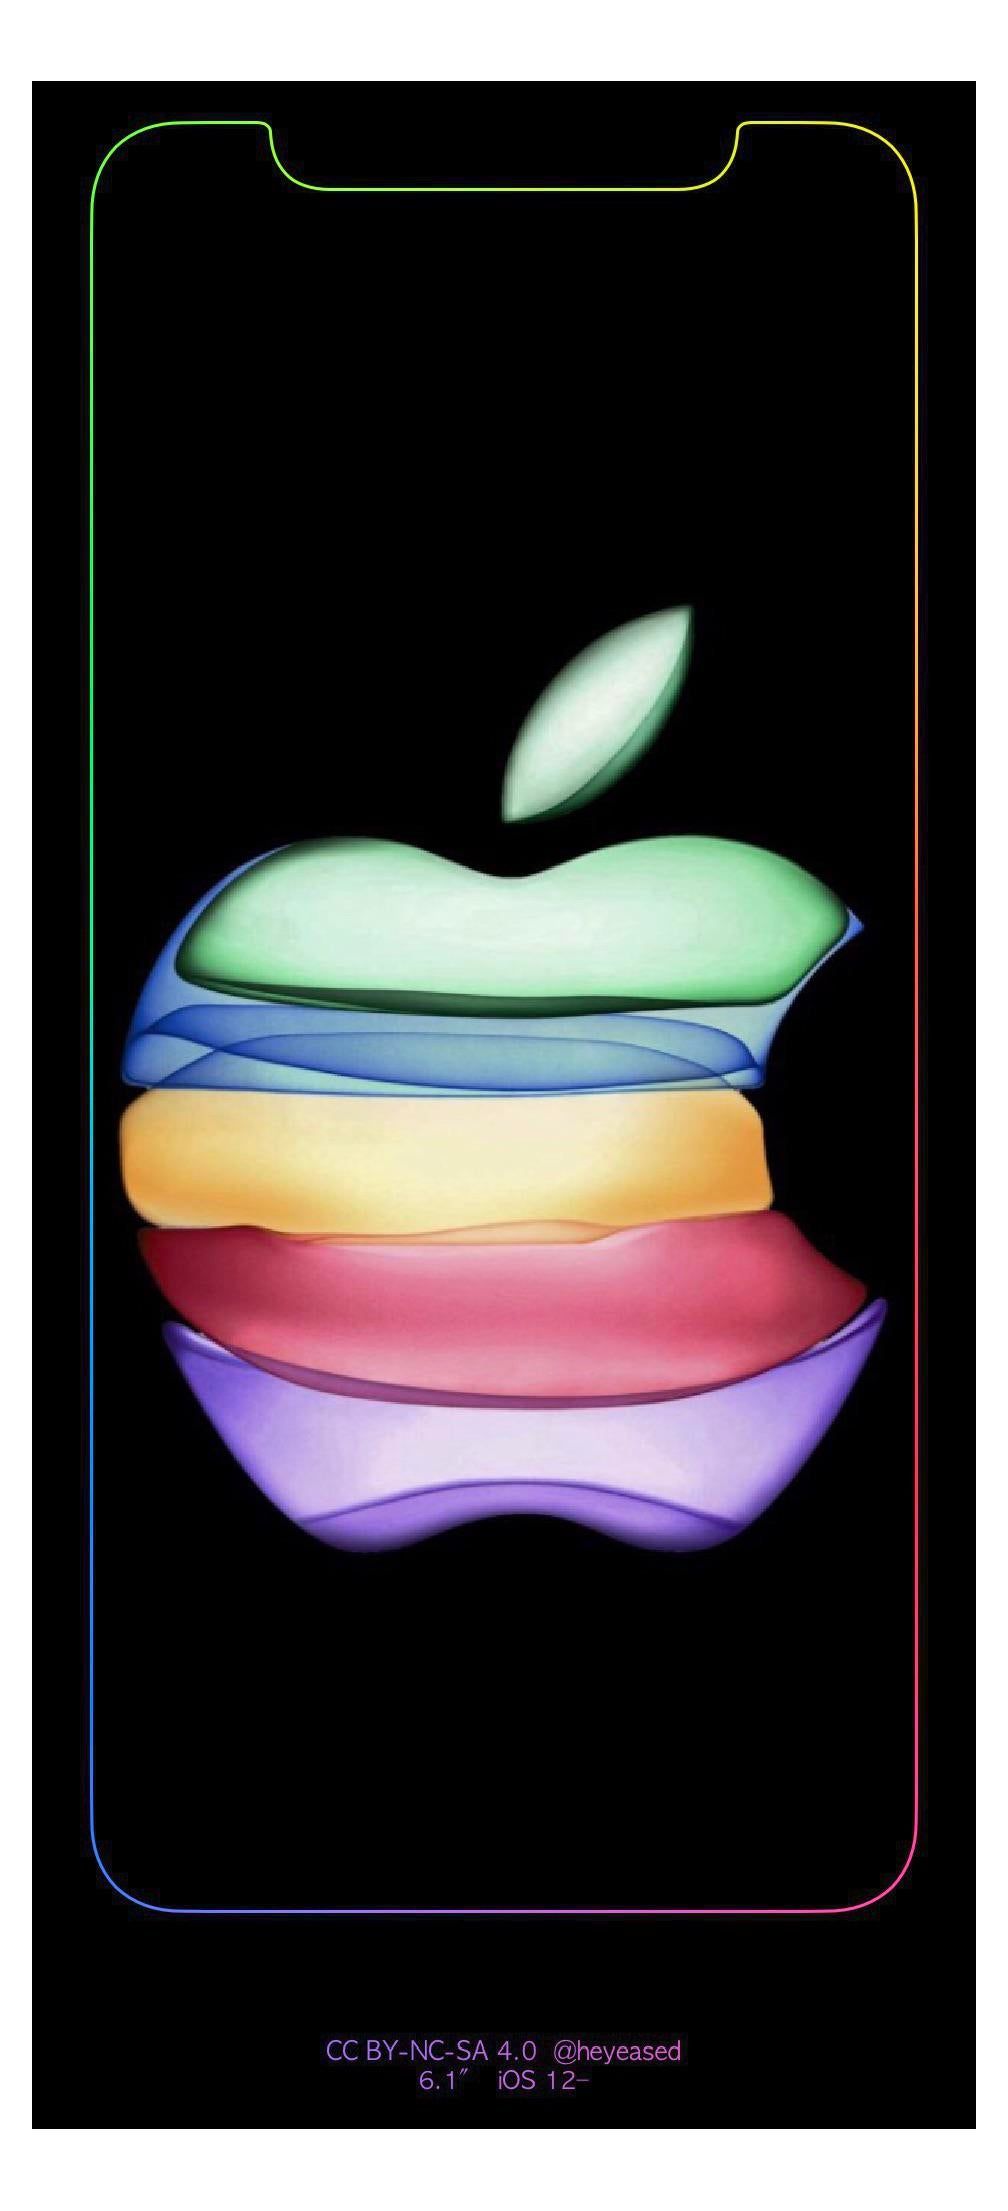 Apple invite logo with rainbow border wallpaper. iPhone X